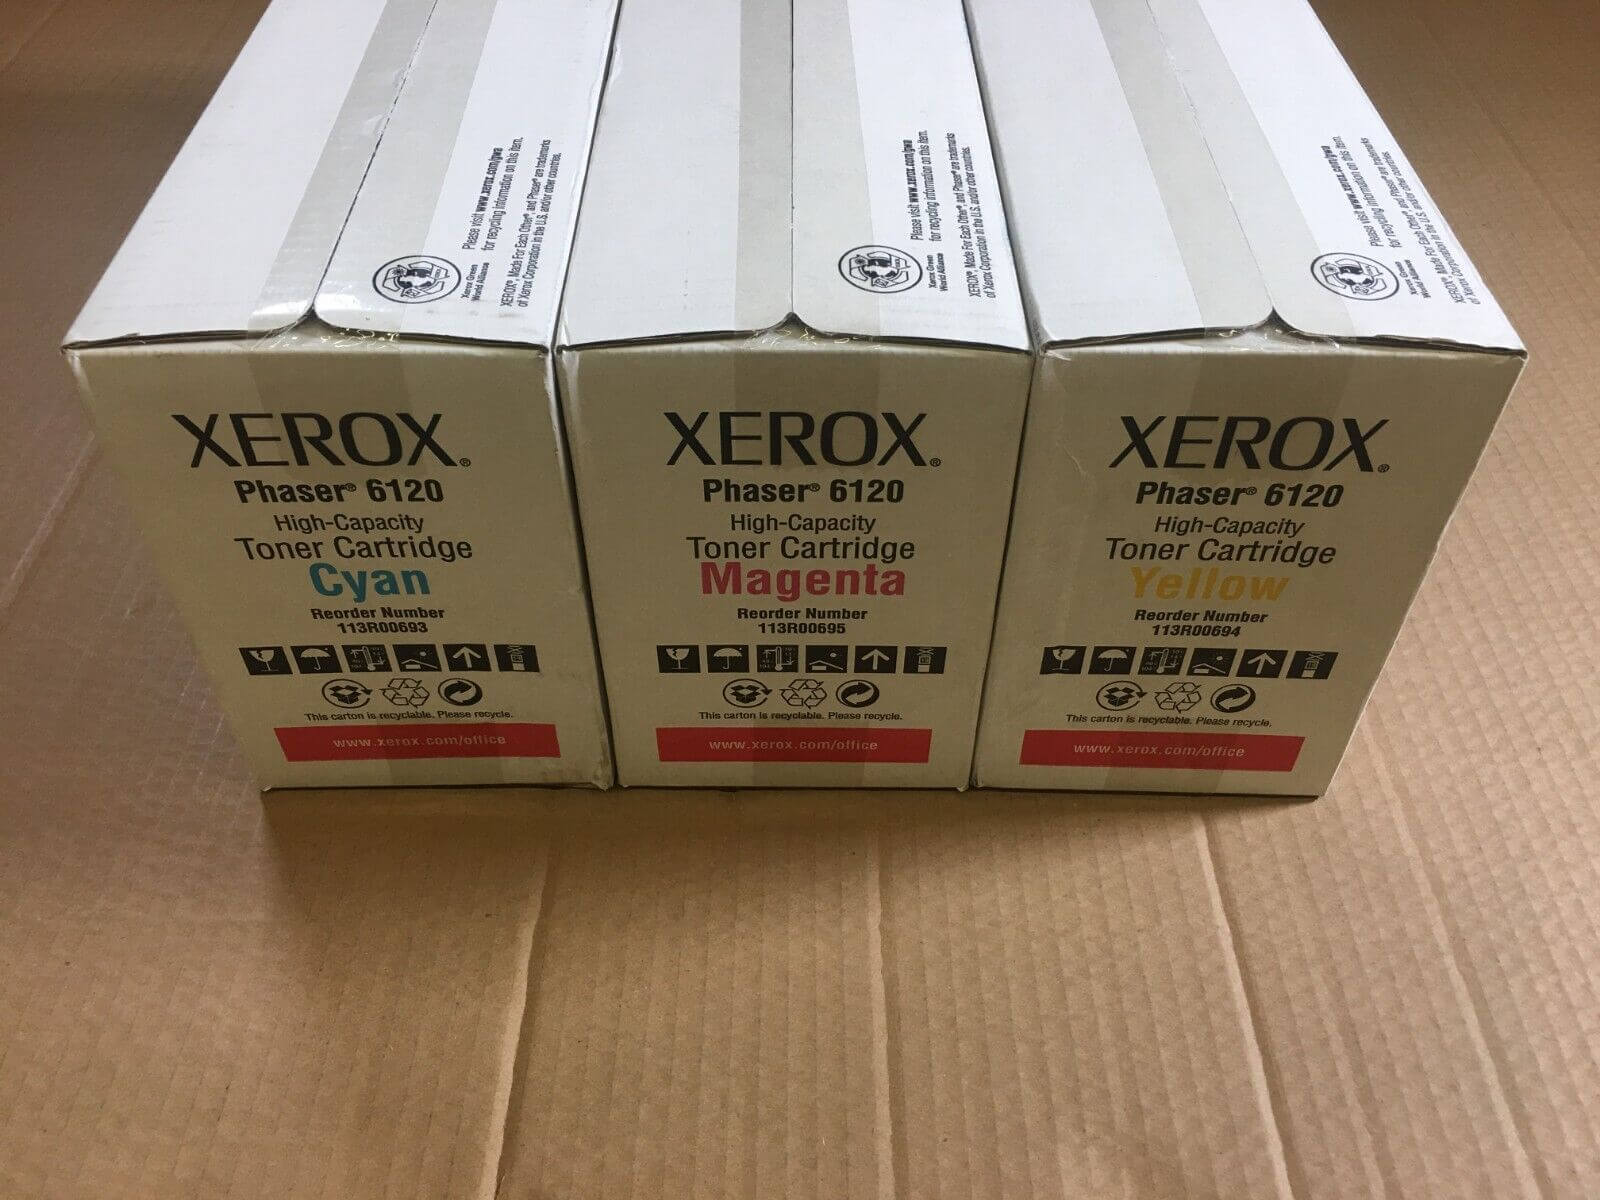 Genuine Xerox Phaser 6120 CMY High Capacity 113R00693 -95 - FedEx 2Day Air!! - copier-clearance-center